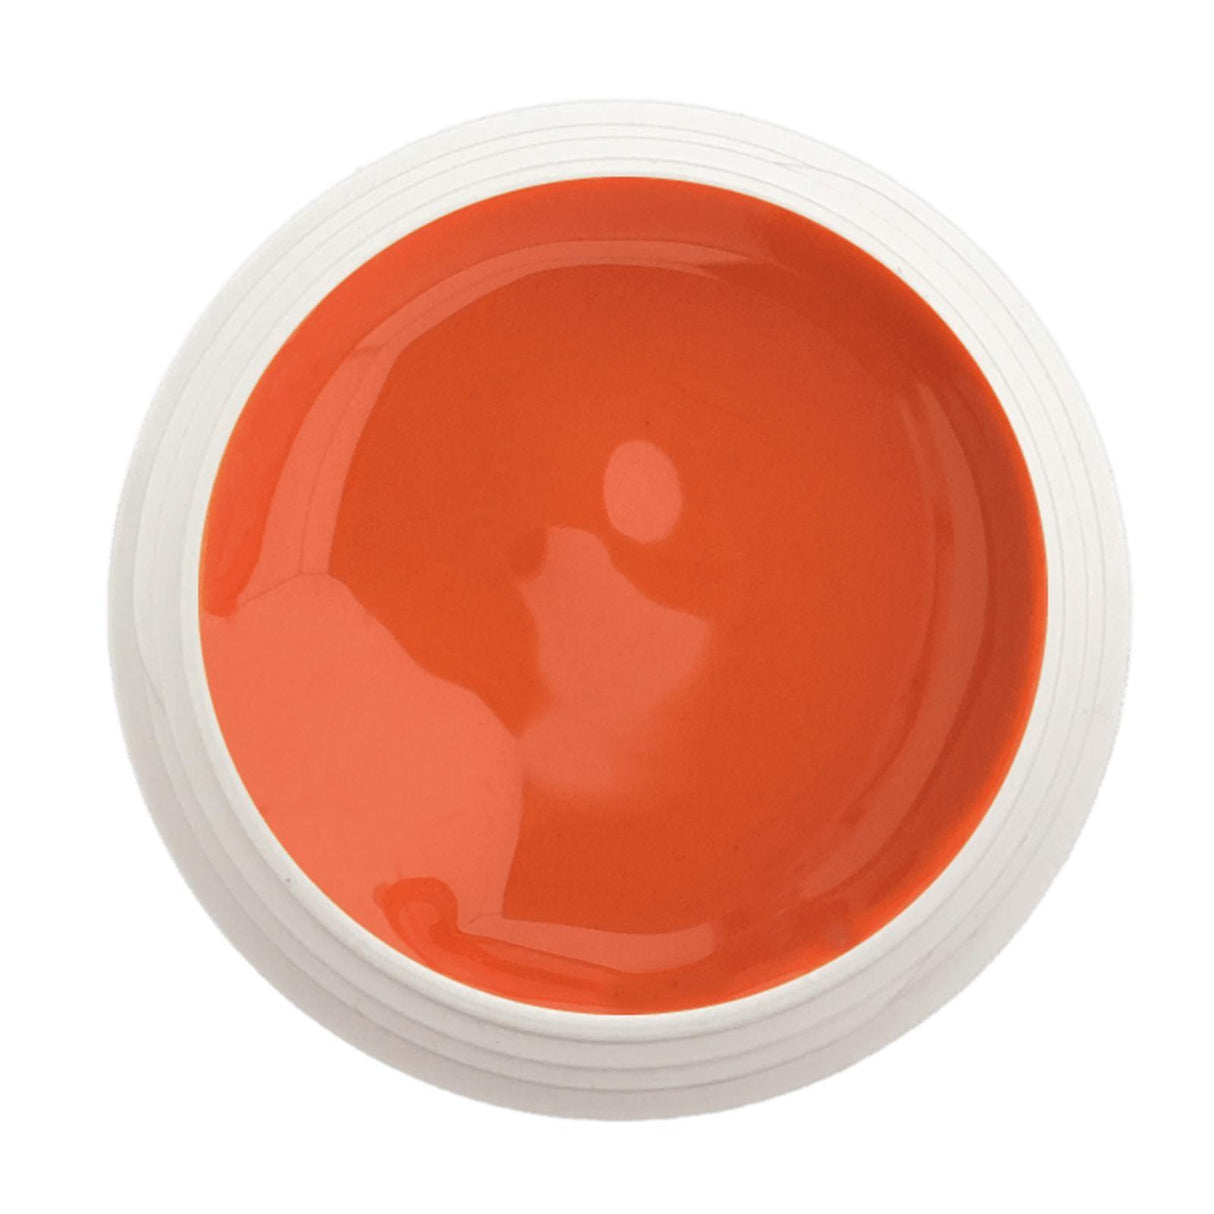 #688 Premium-PURE Color Gel 5ml Orange - MSE - The Beauty Company